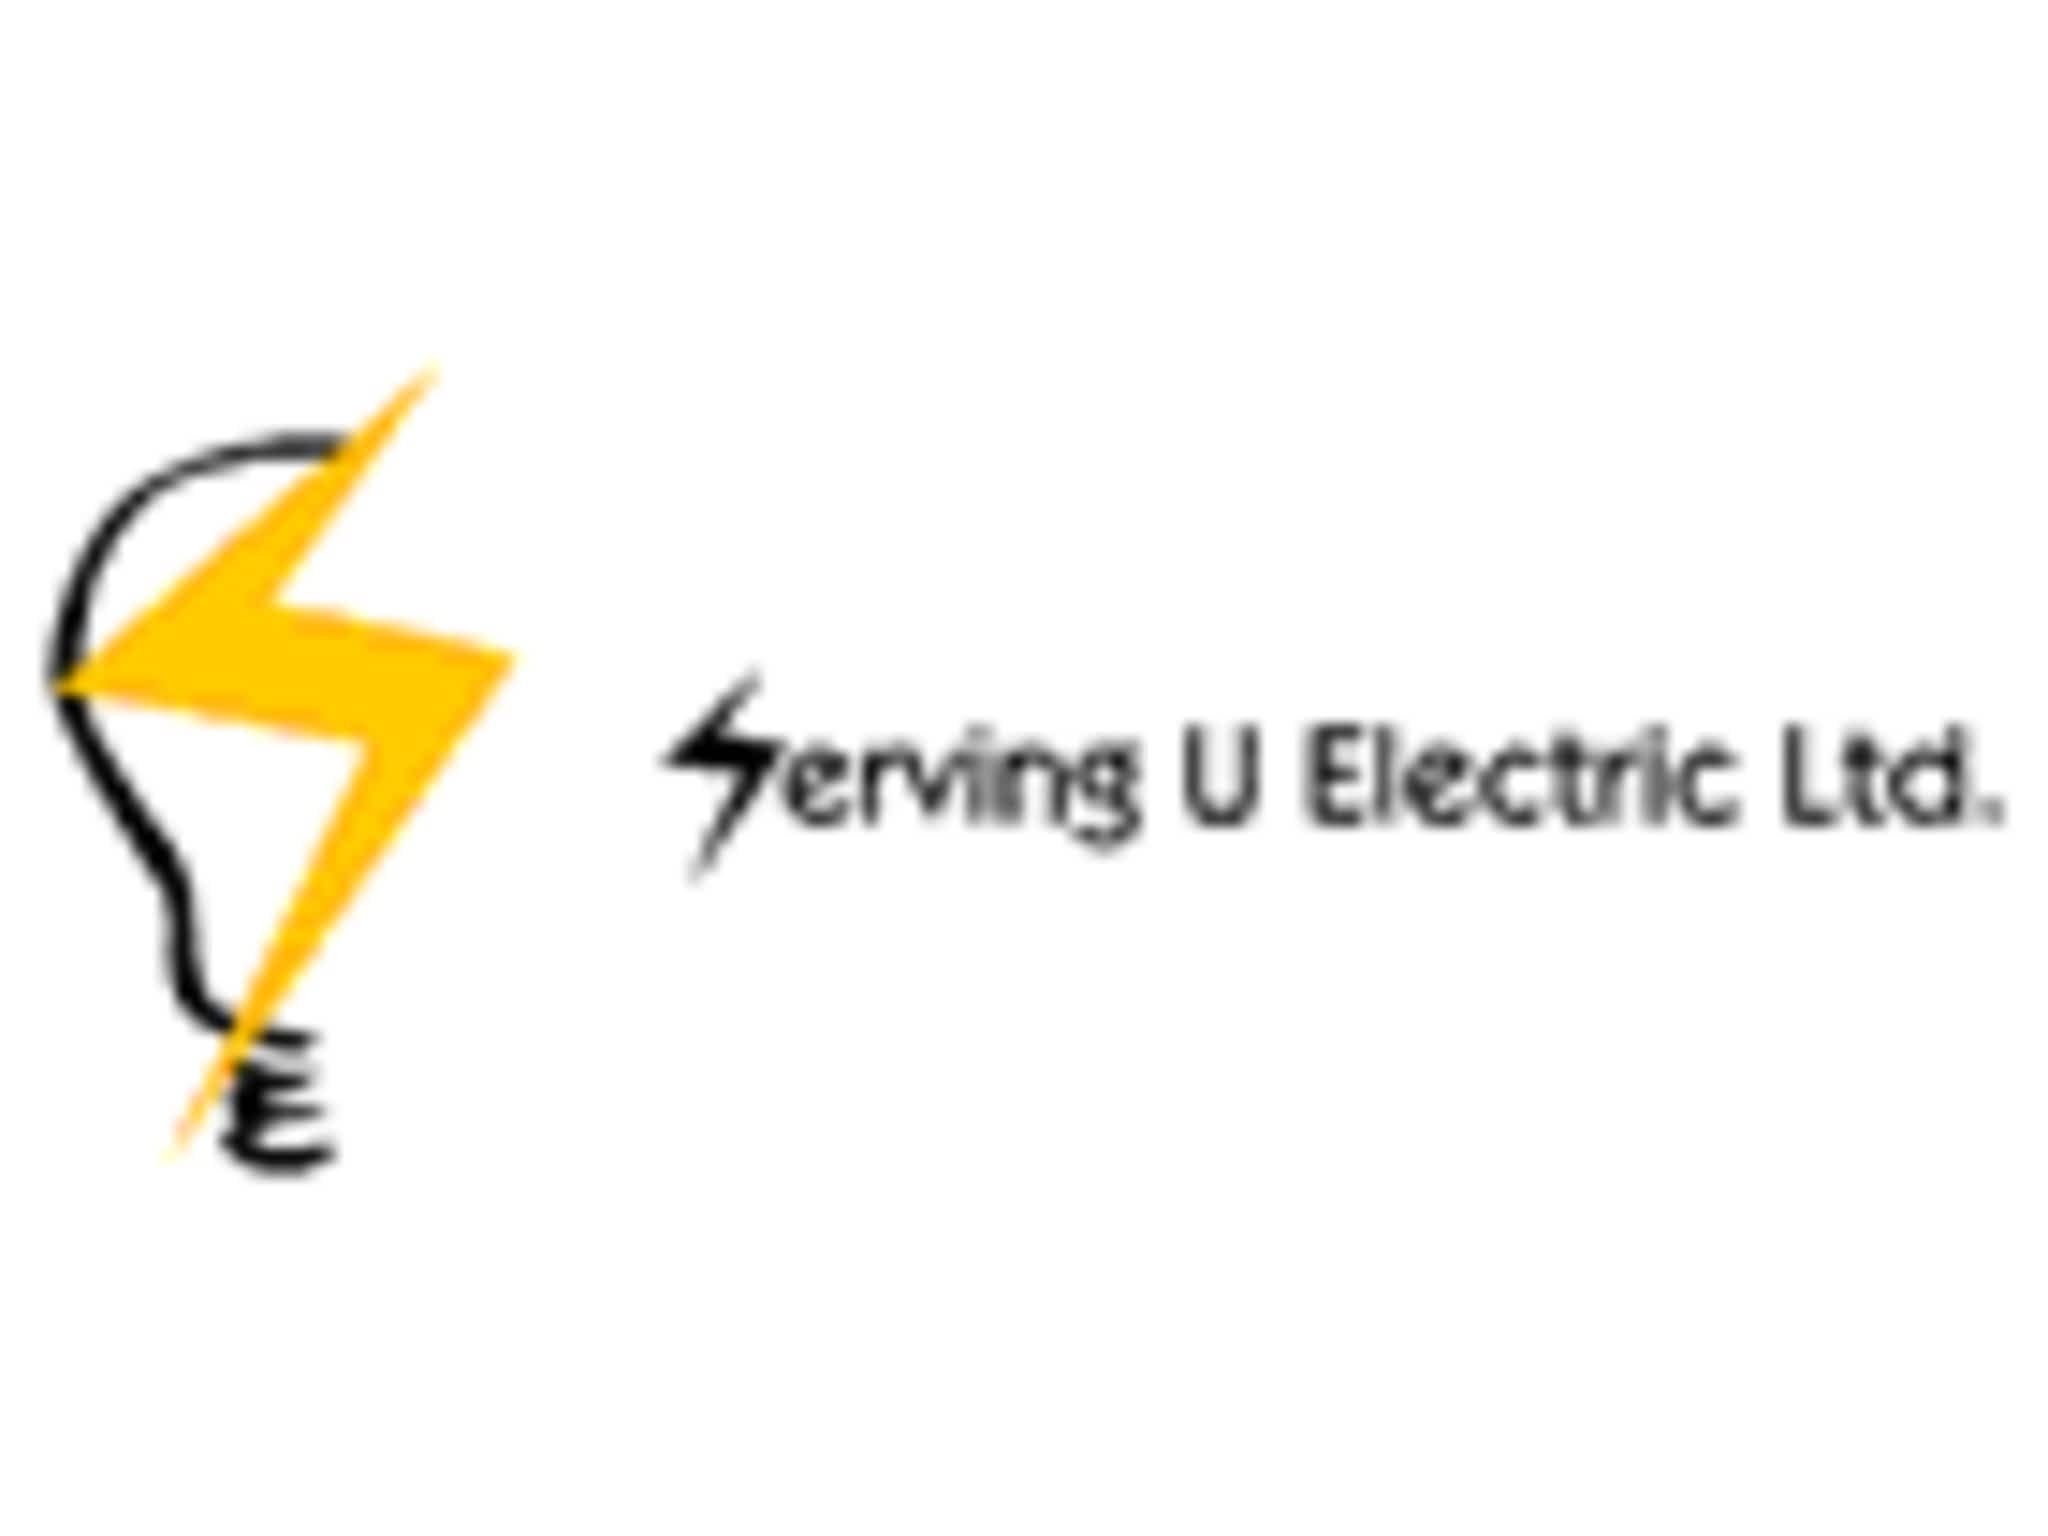 photo Serving U Electric Ltd